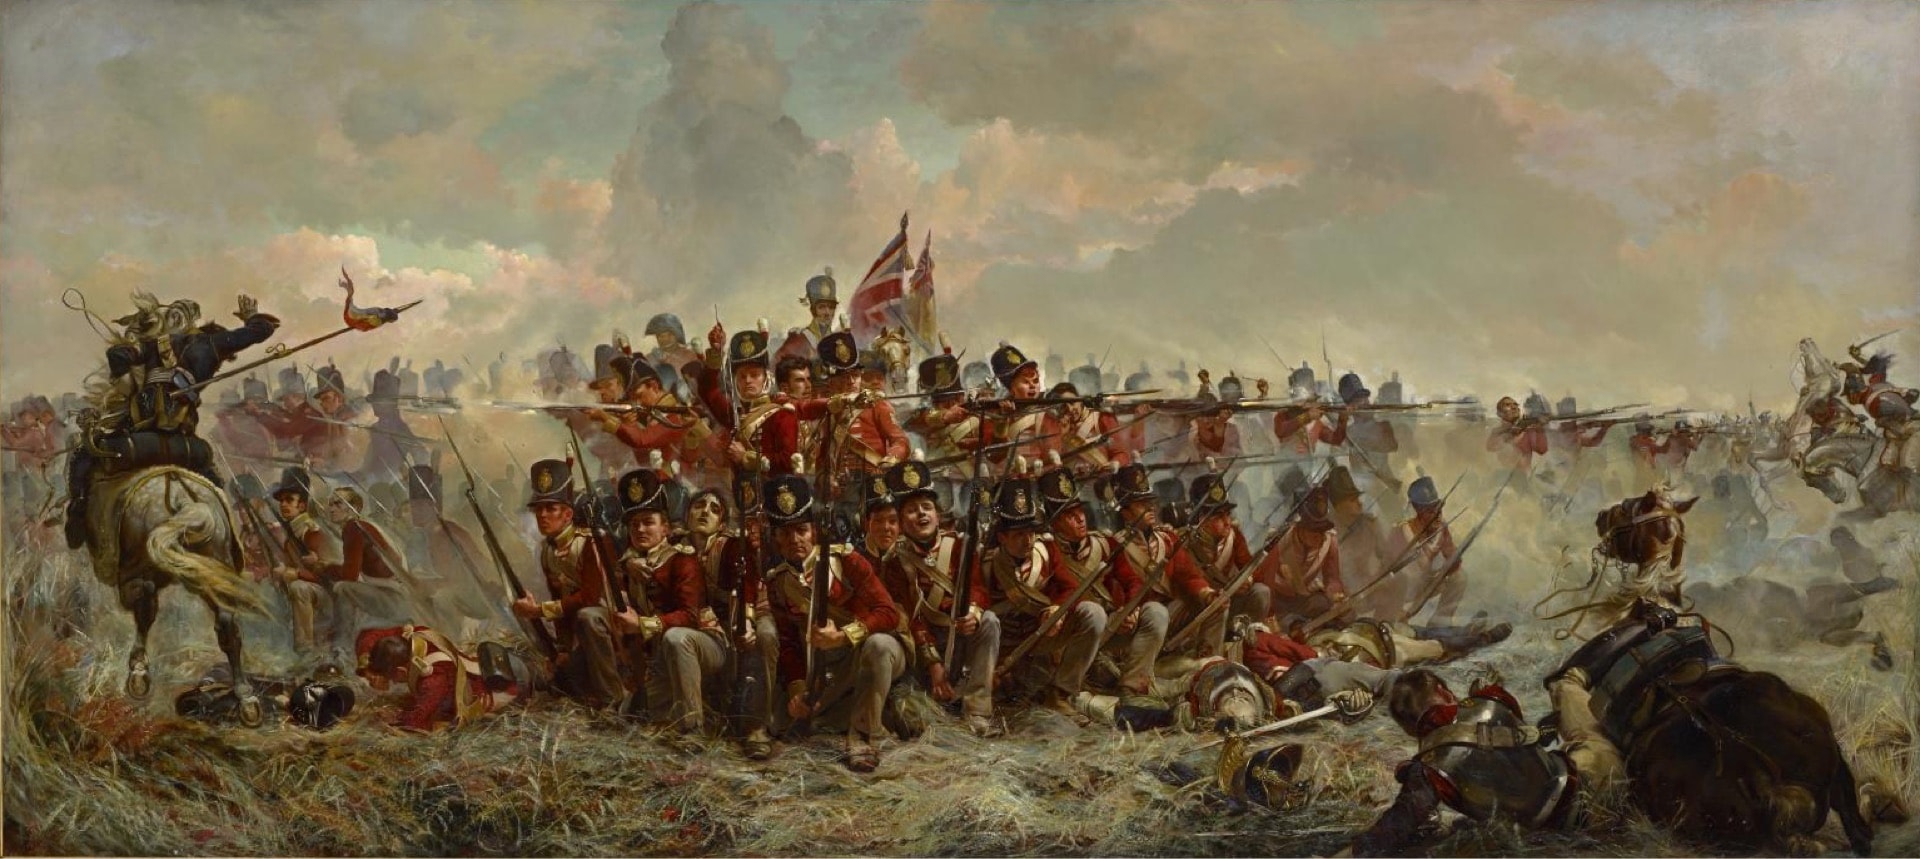 Elizabeth THOMPSON<br/><em> The 28th Regiment at Quatre Bras</em> 1875 <br/>oil on canvas <br/>97.2 x 216.2 cm<br/> National Gallery of Victoria, Melbourne<br/> Purchased, 1884 <br/>p.309.9-1